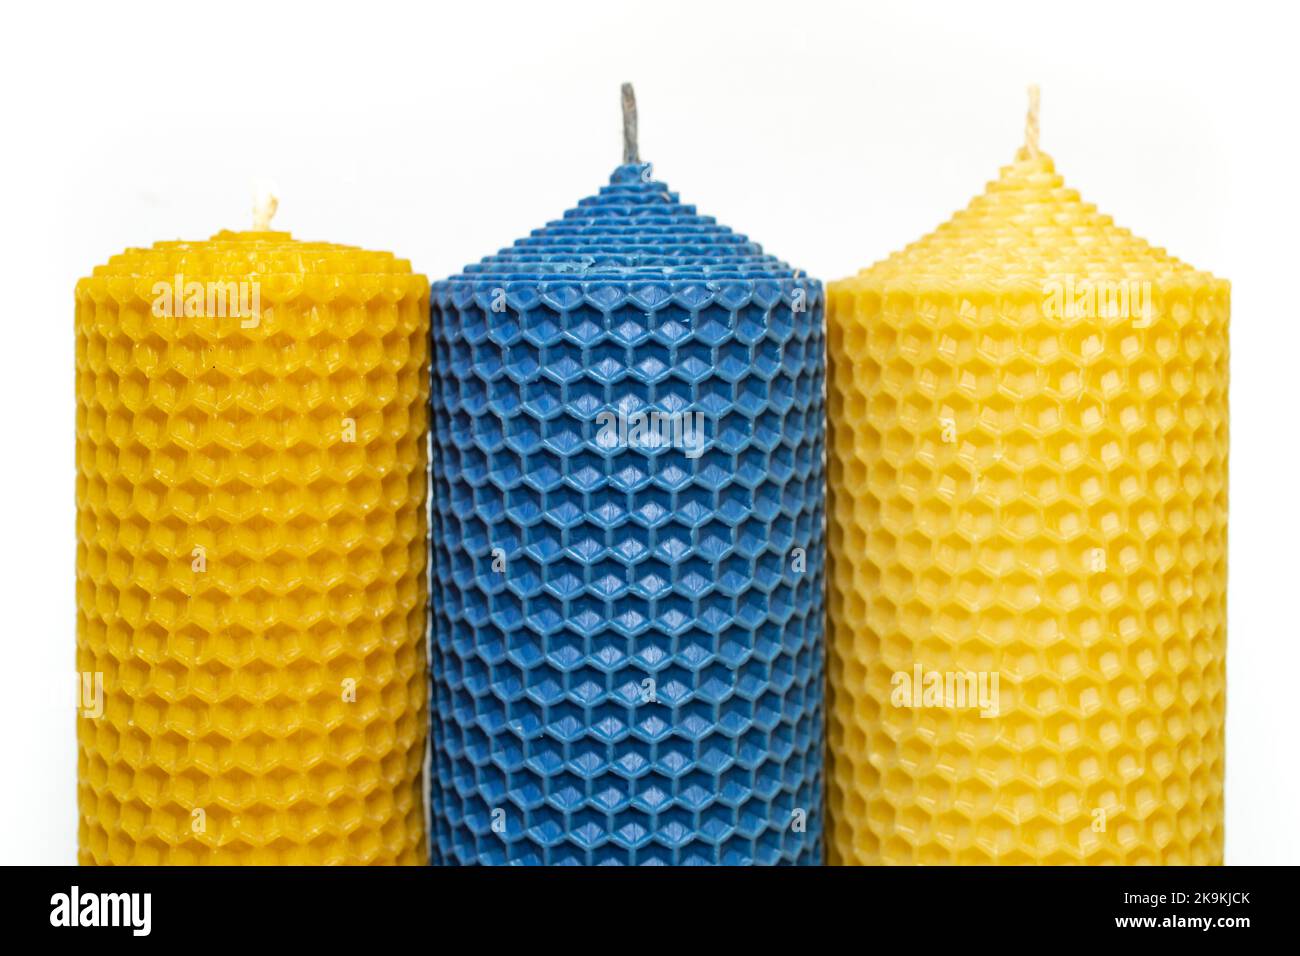 candele gialle e blu con motivo a nido d'ape, primo piano Foto Stock